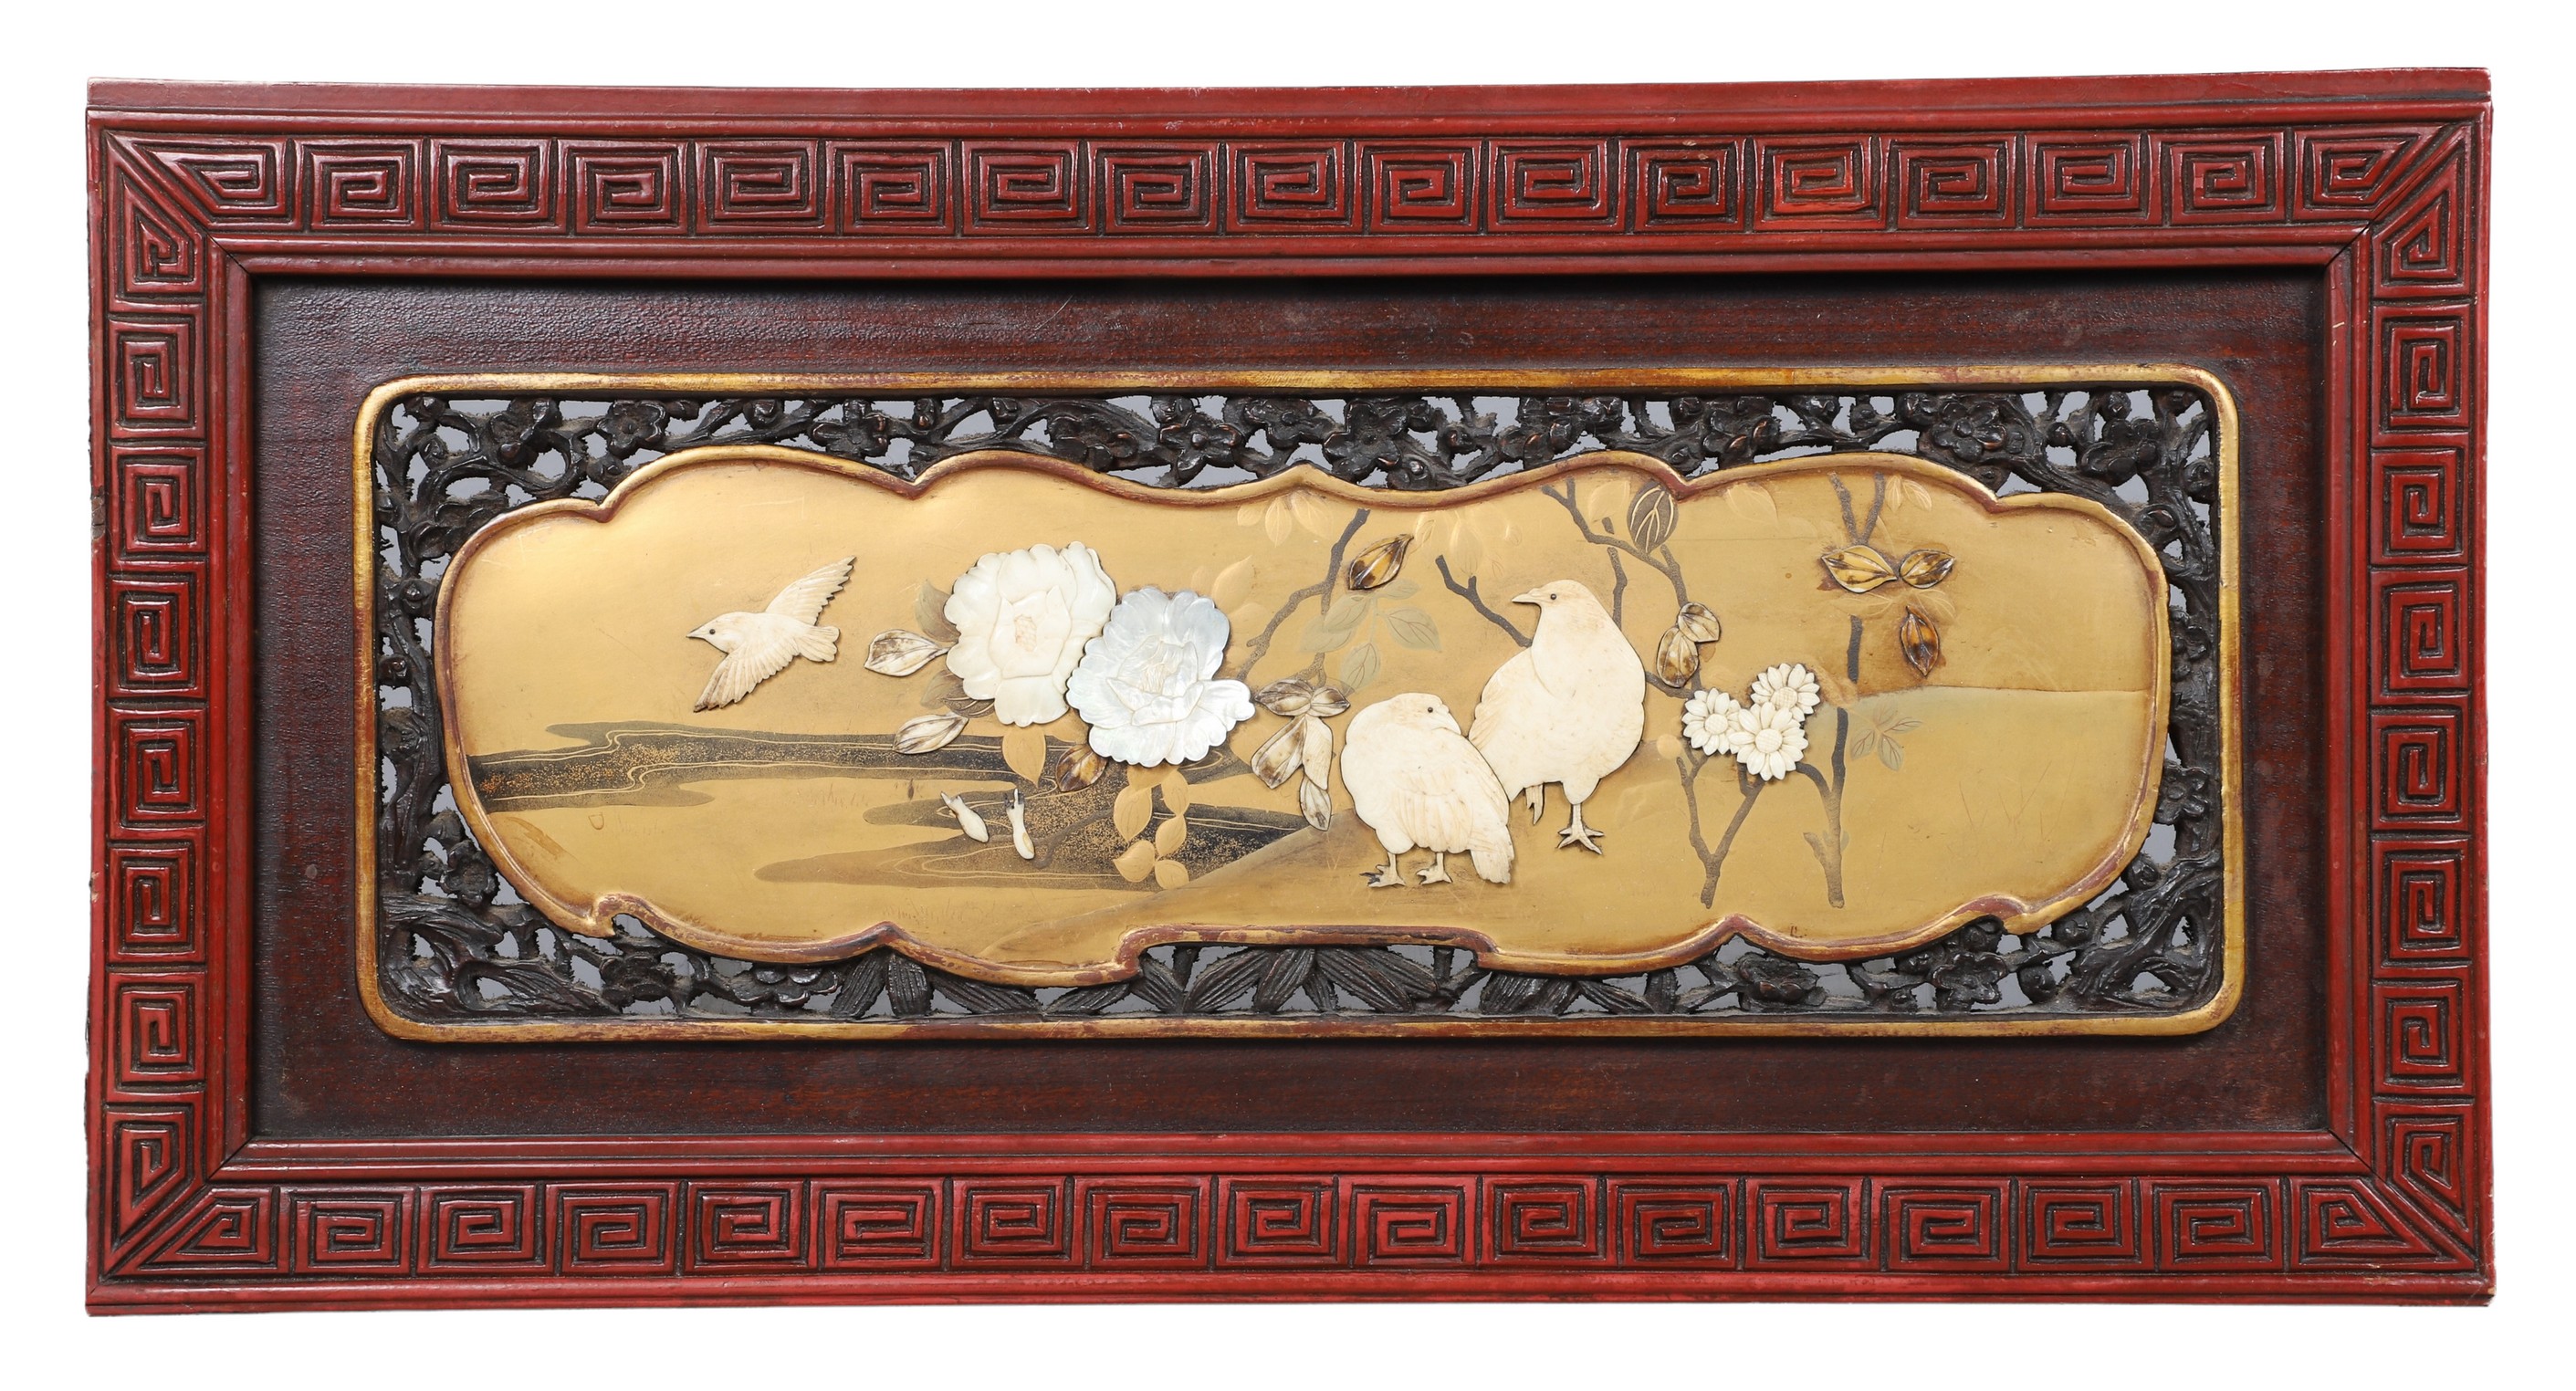 Japanese lacquer plaque shibayama 318009